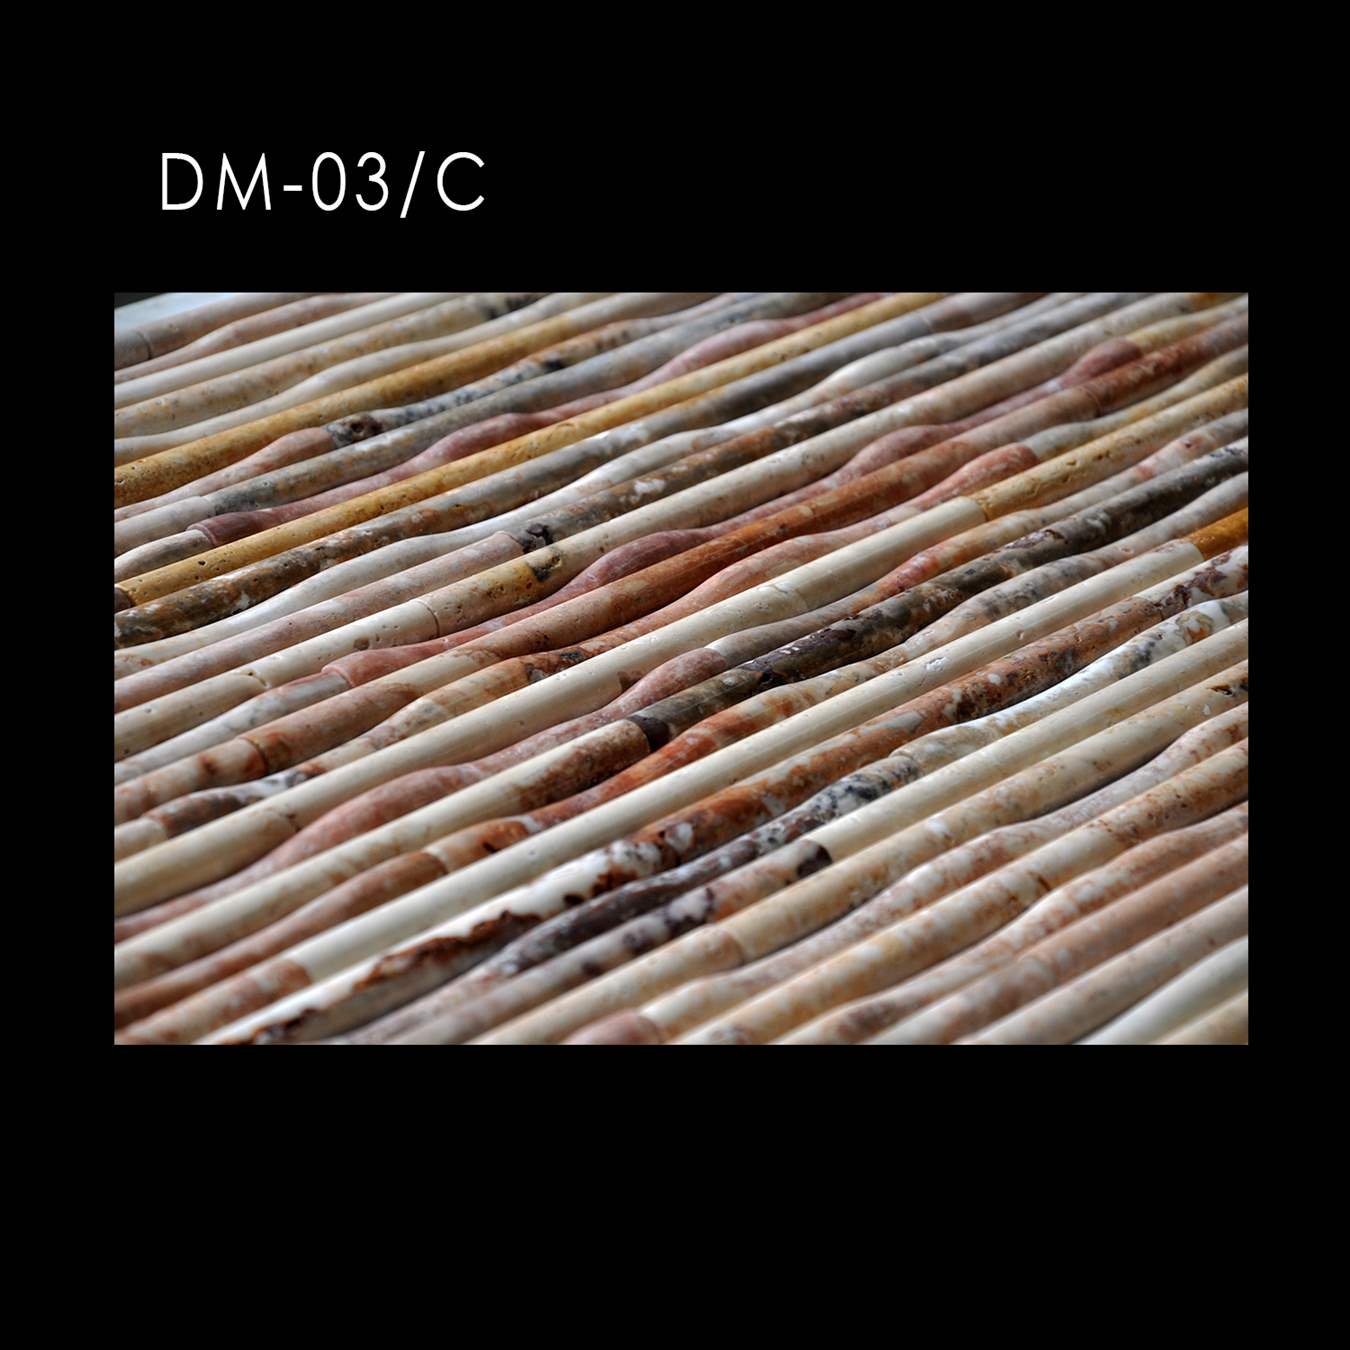 dm03c - efesusstone mermer